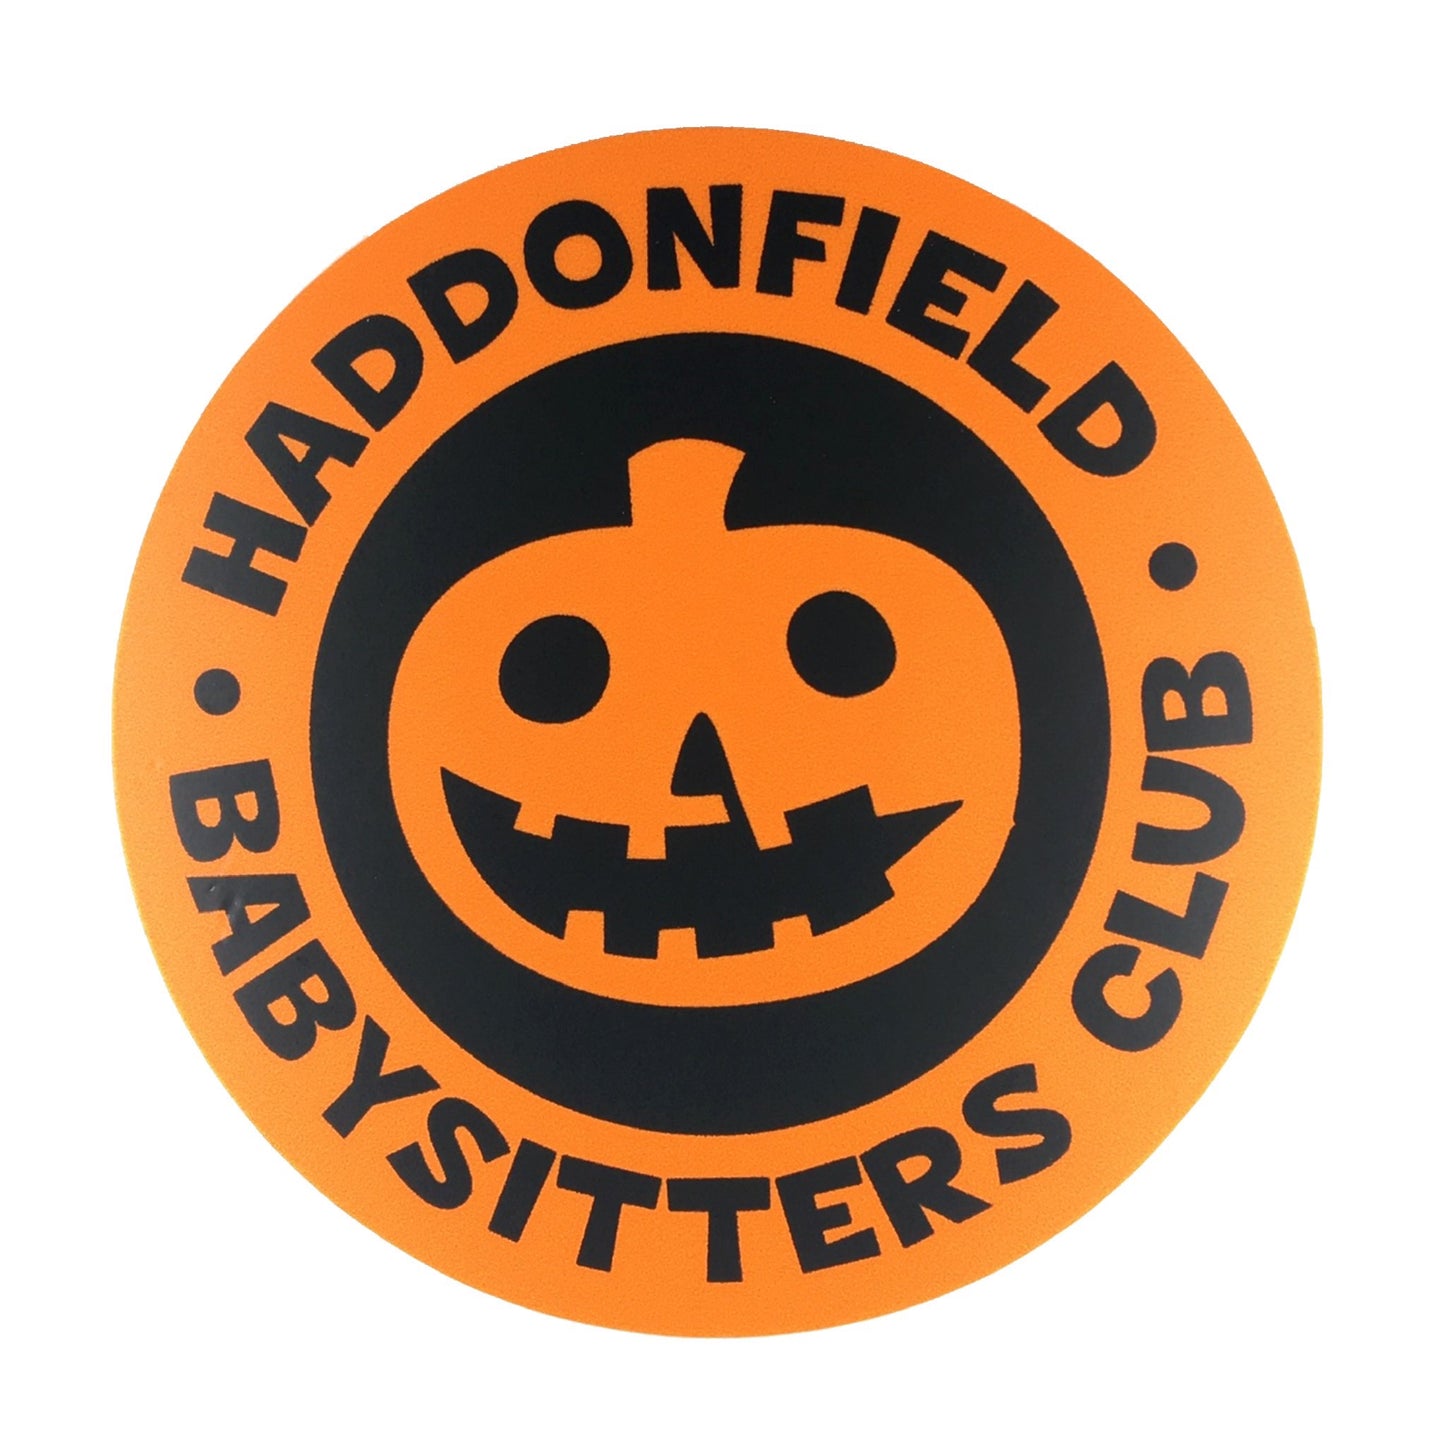 Haddonfield Babysitters Club circle sticker